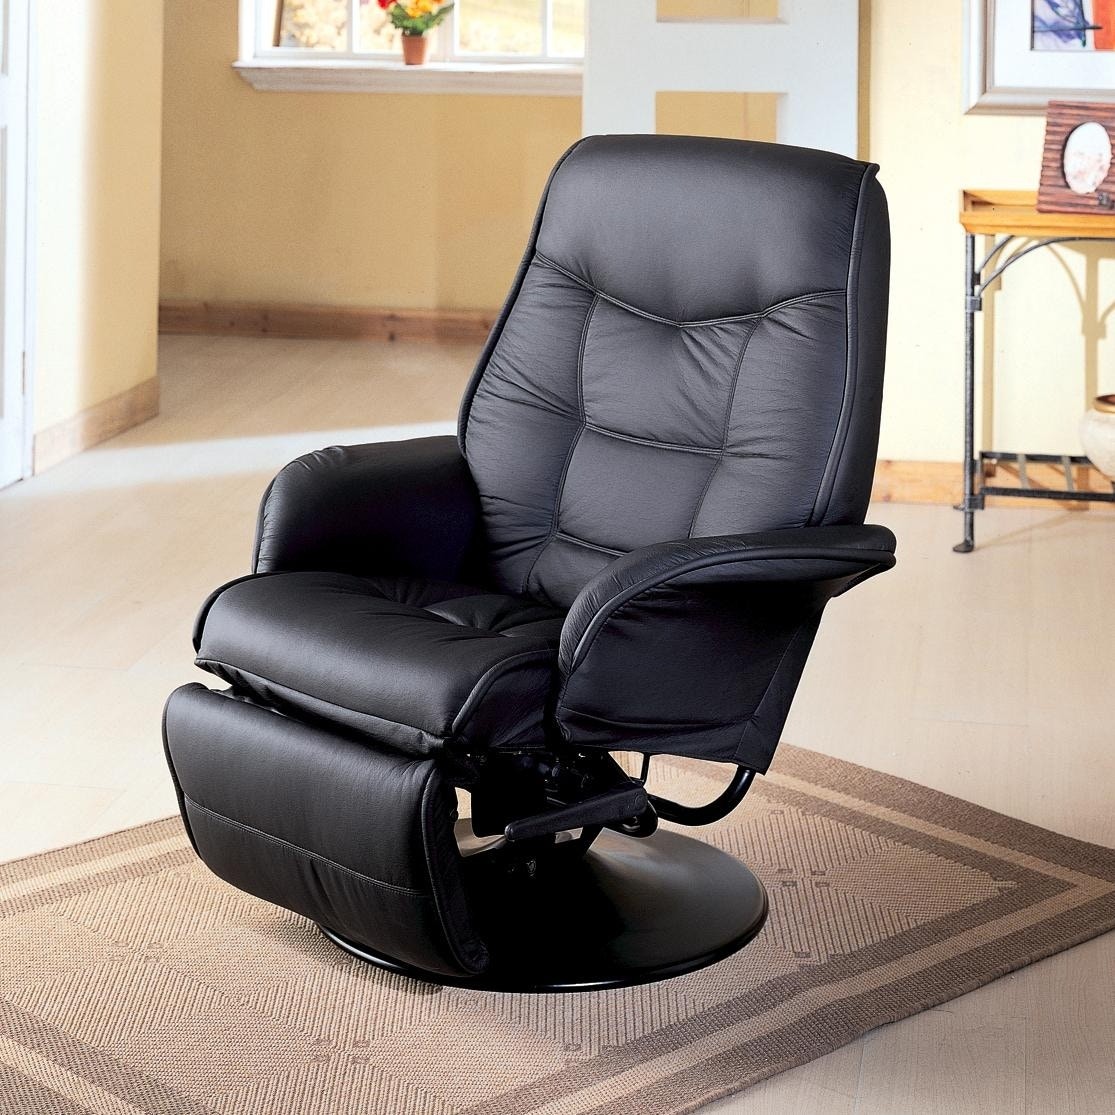 Black leather swivel recliner